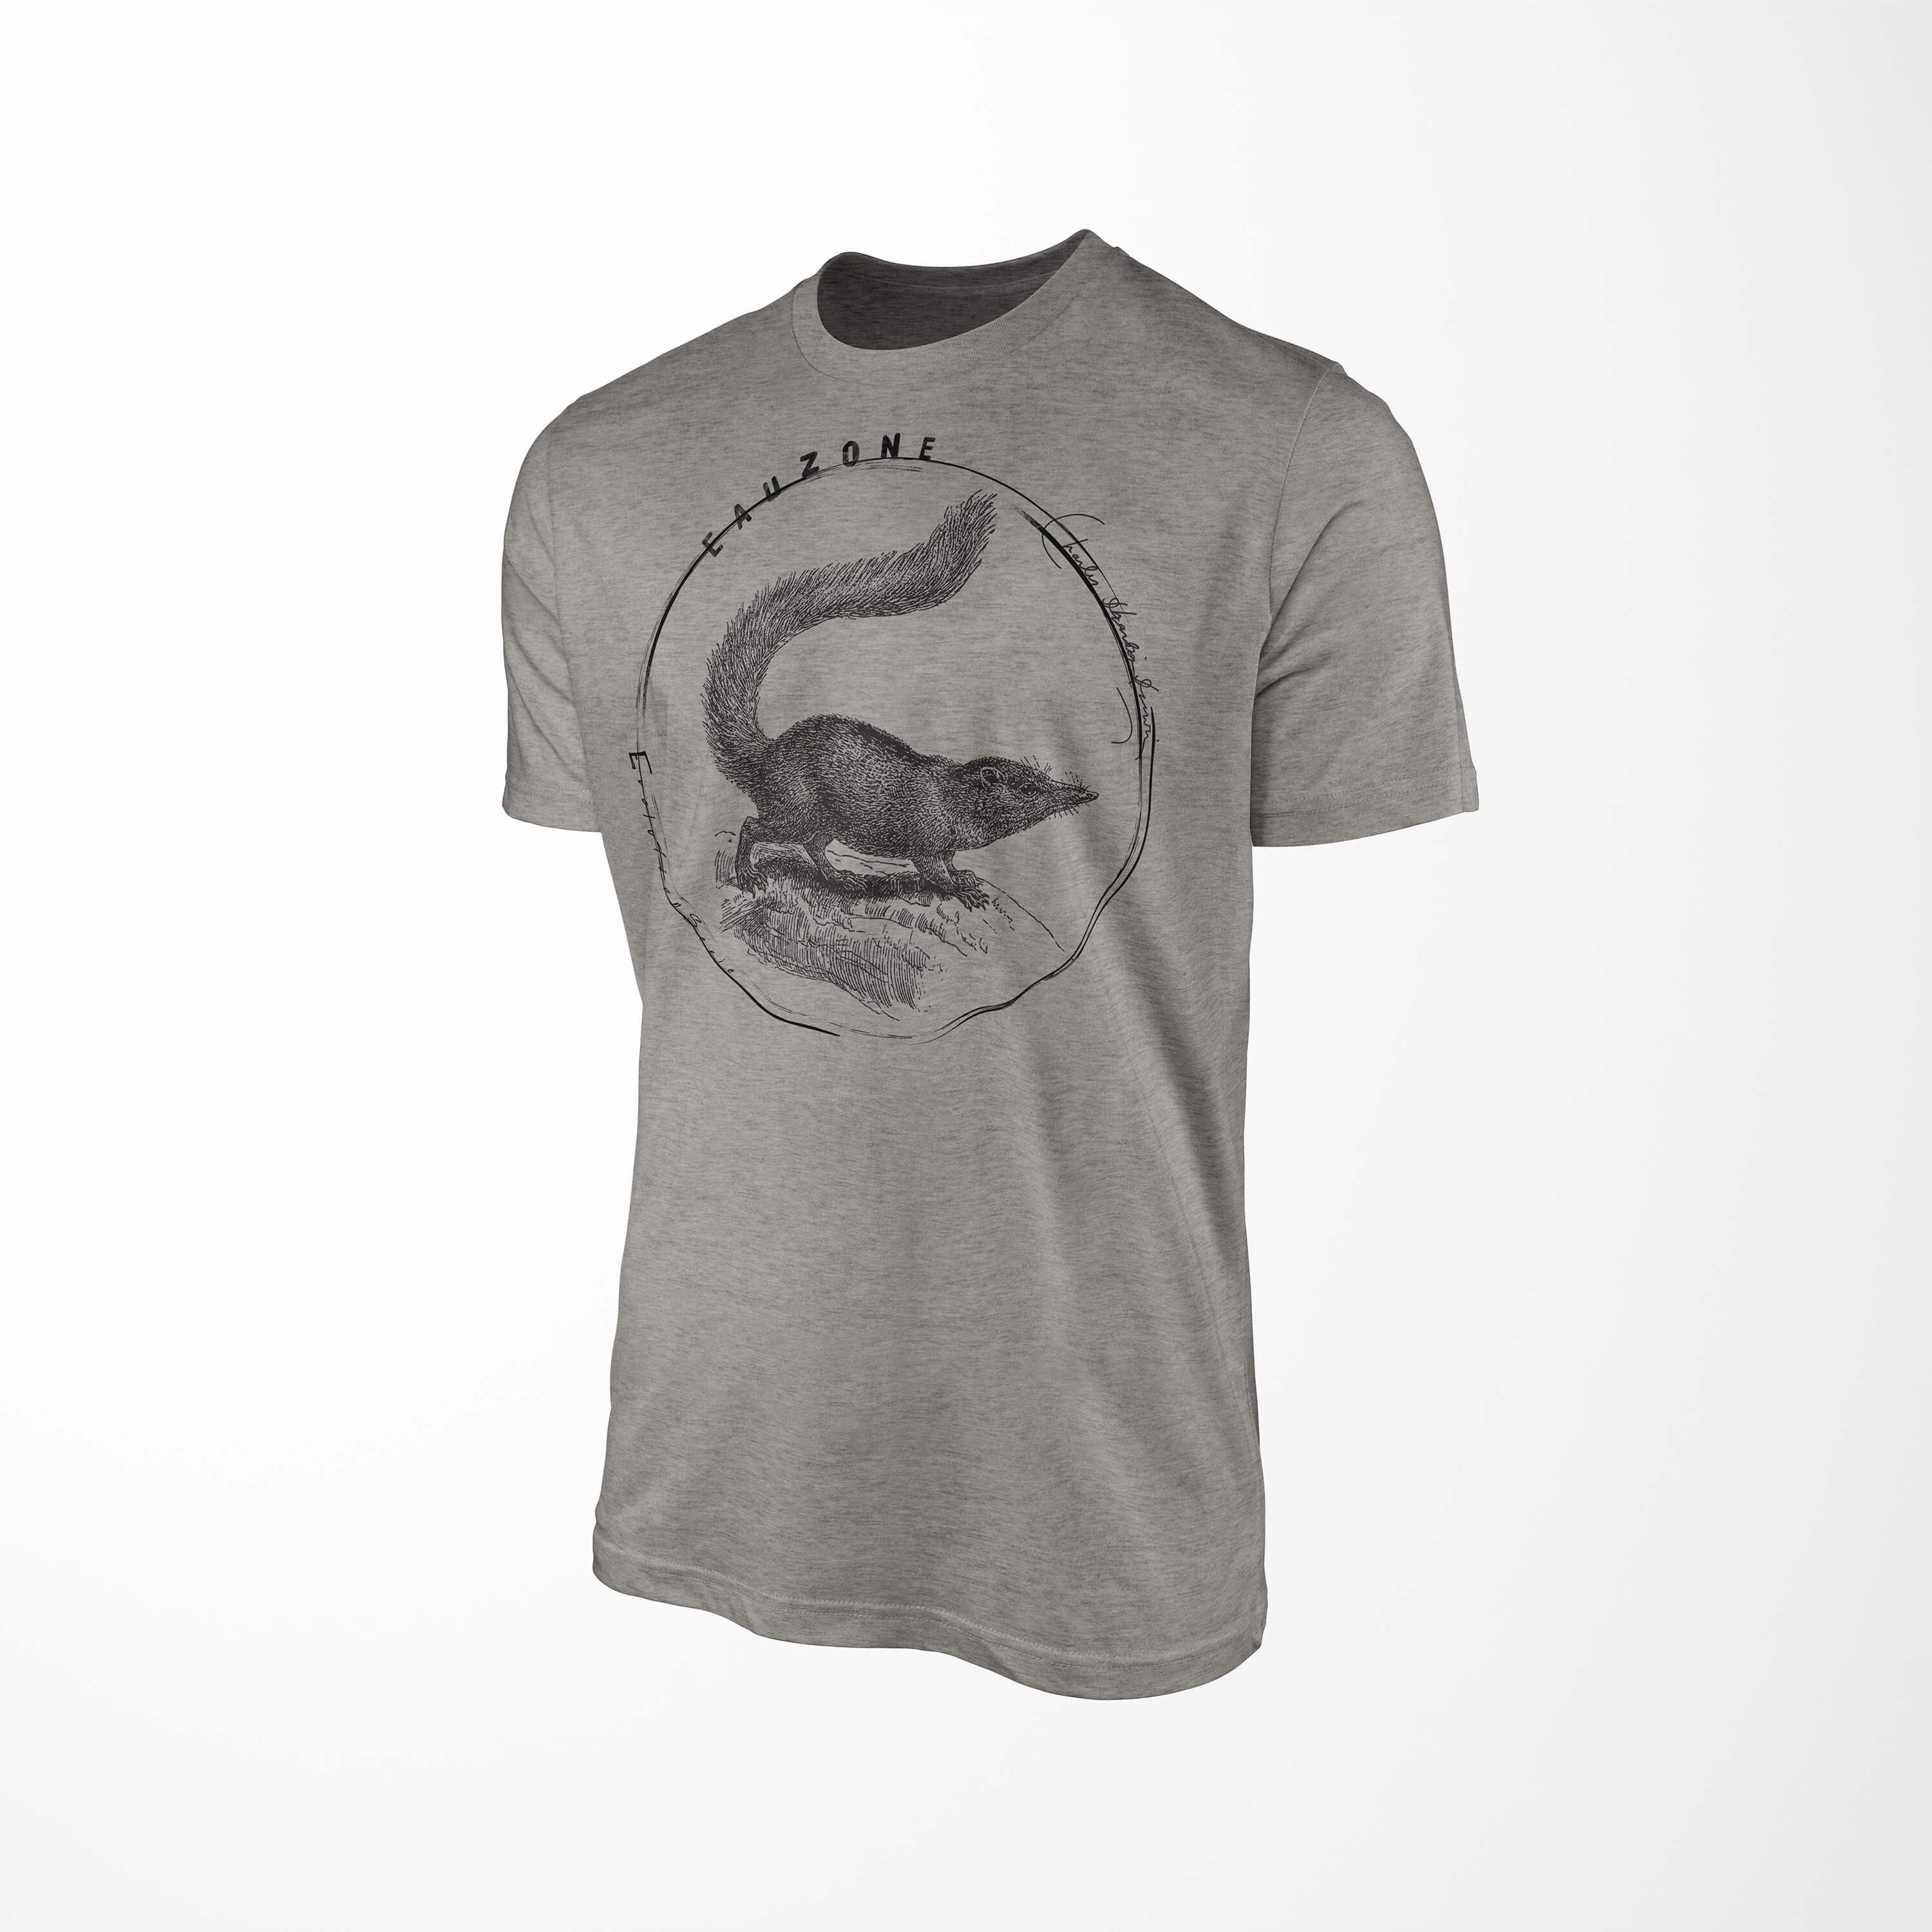 Art Herren Evolution Ash T-Shirt Sinus T-Shirt Spitzhörnchen